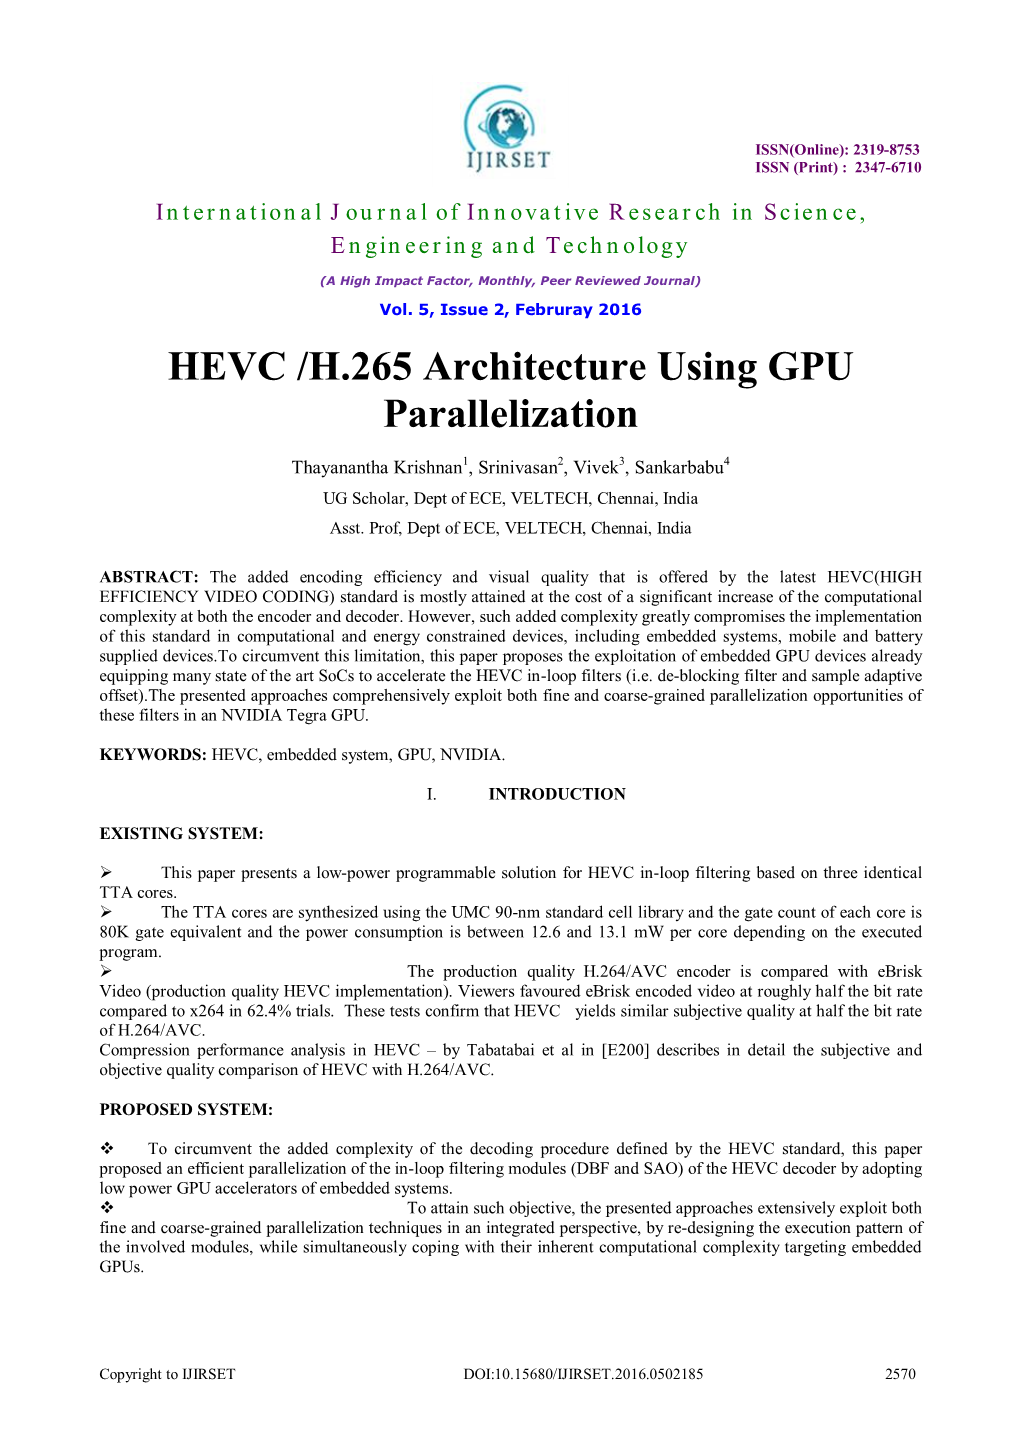 HEVC /H.265 Architecture Using GPU Parallelization